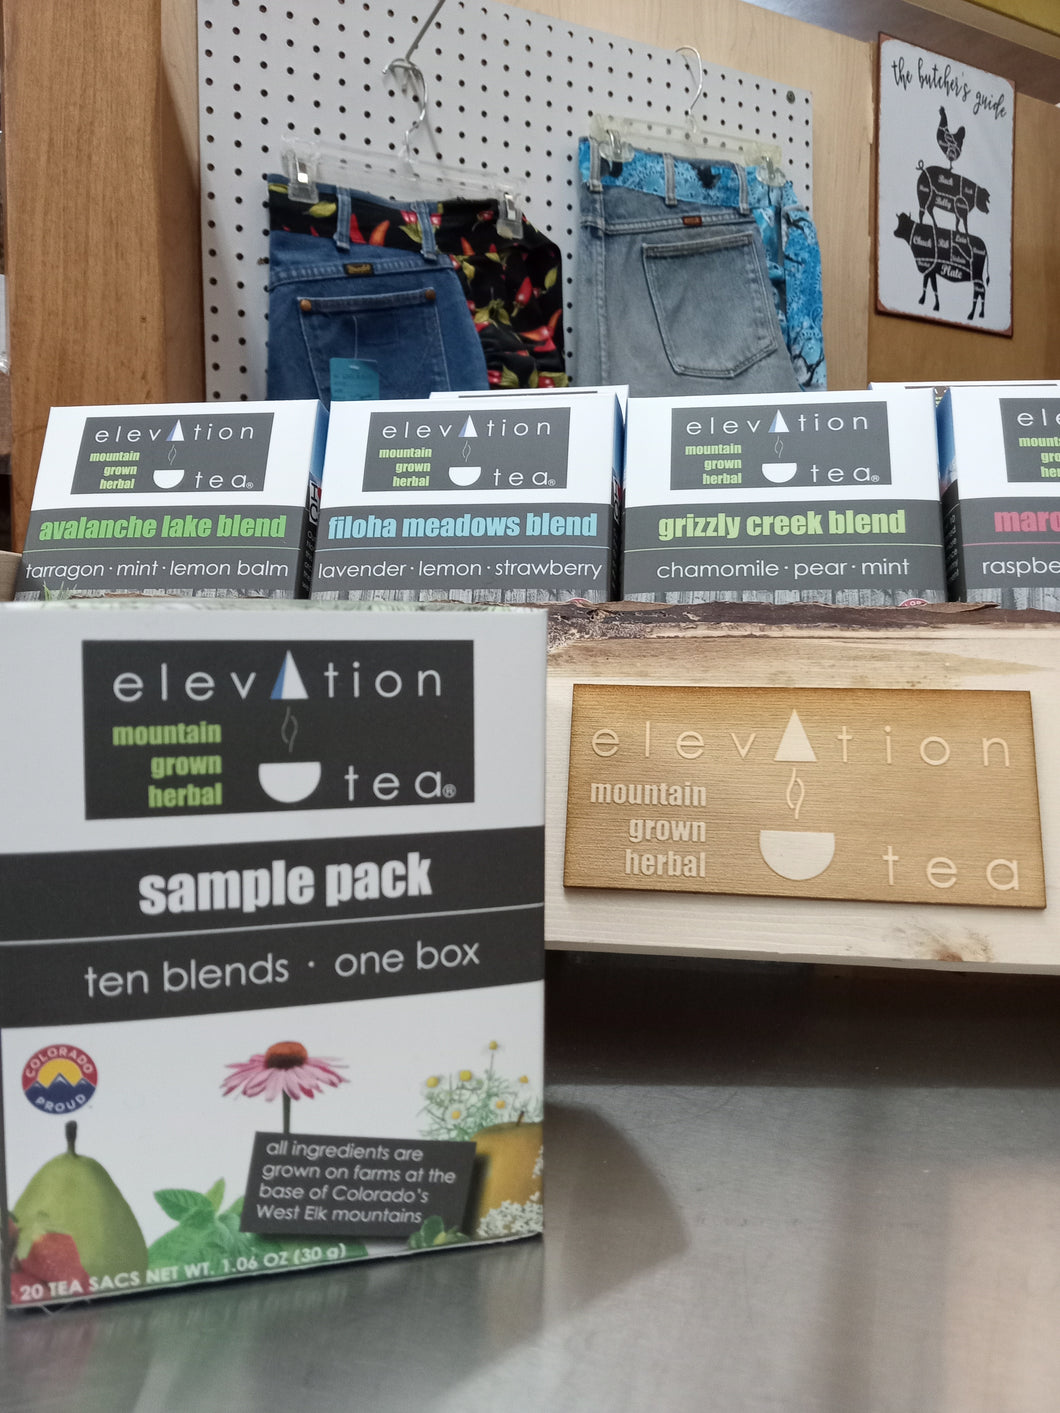 Elevation Mountain Grown Herbal Tea Company: Sample Pack